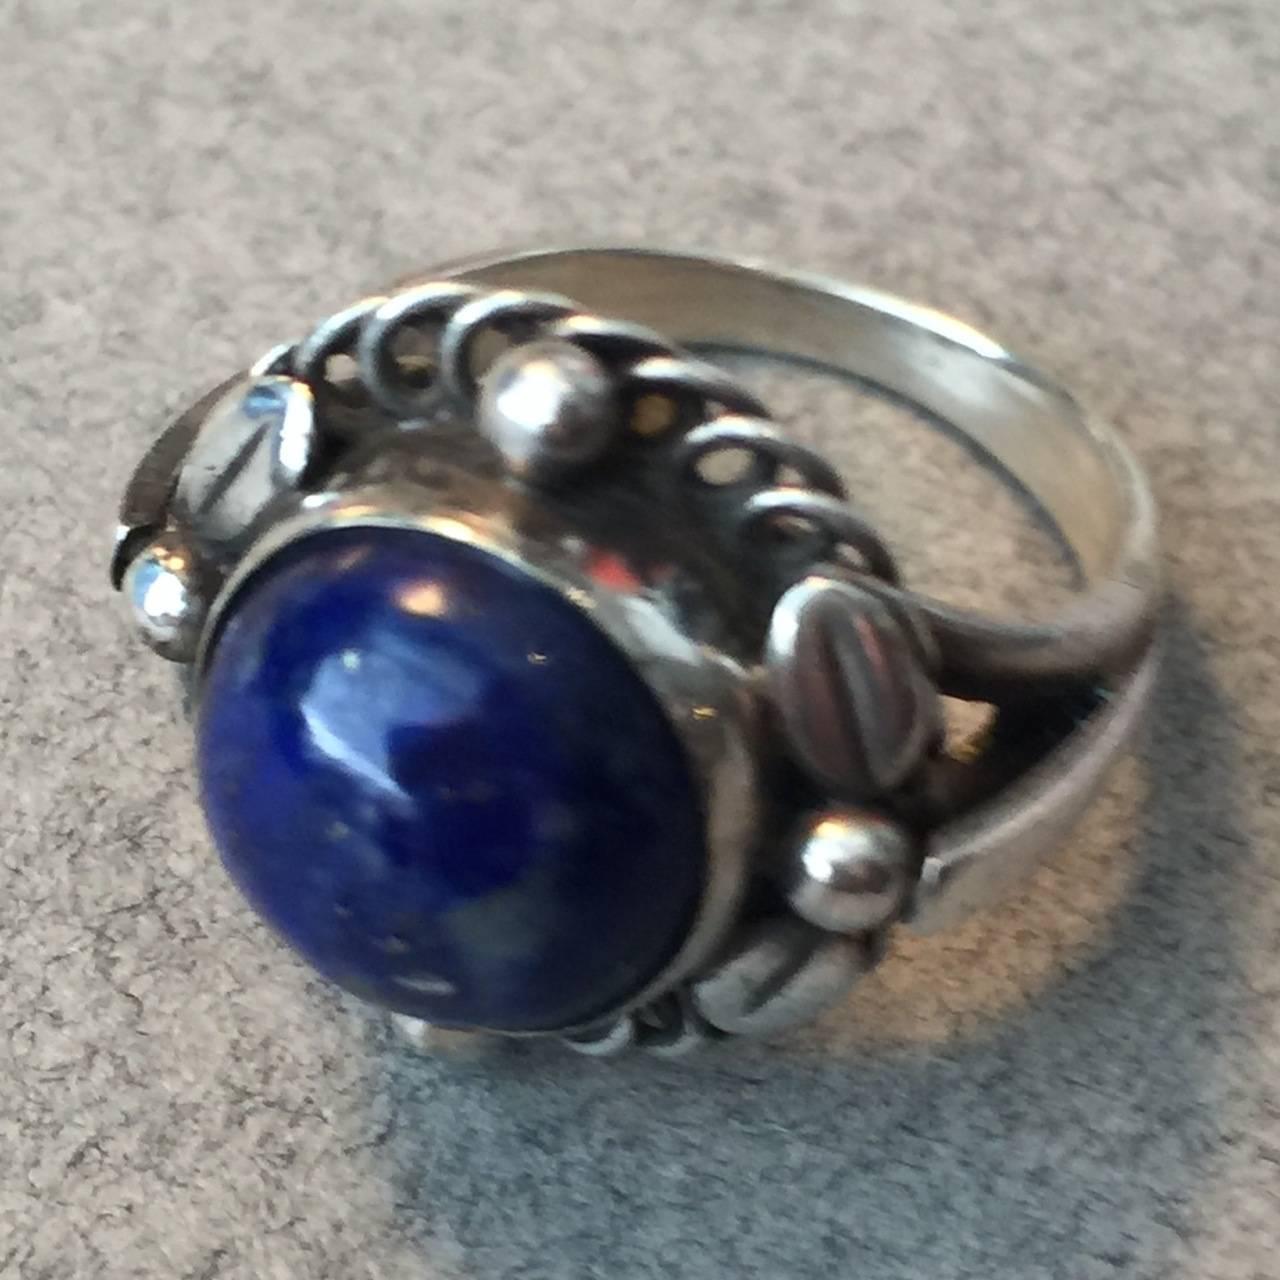 Women's Georg Jensen Sterling Silver Ring No. 1 with Lapis Lazuli